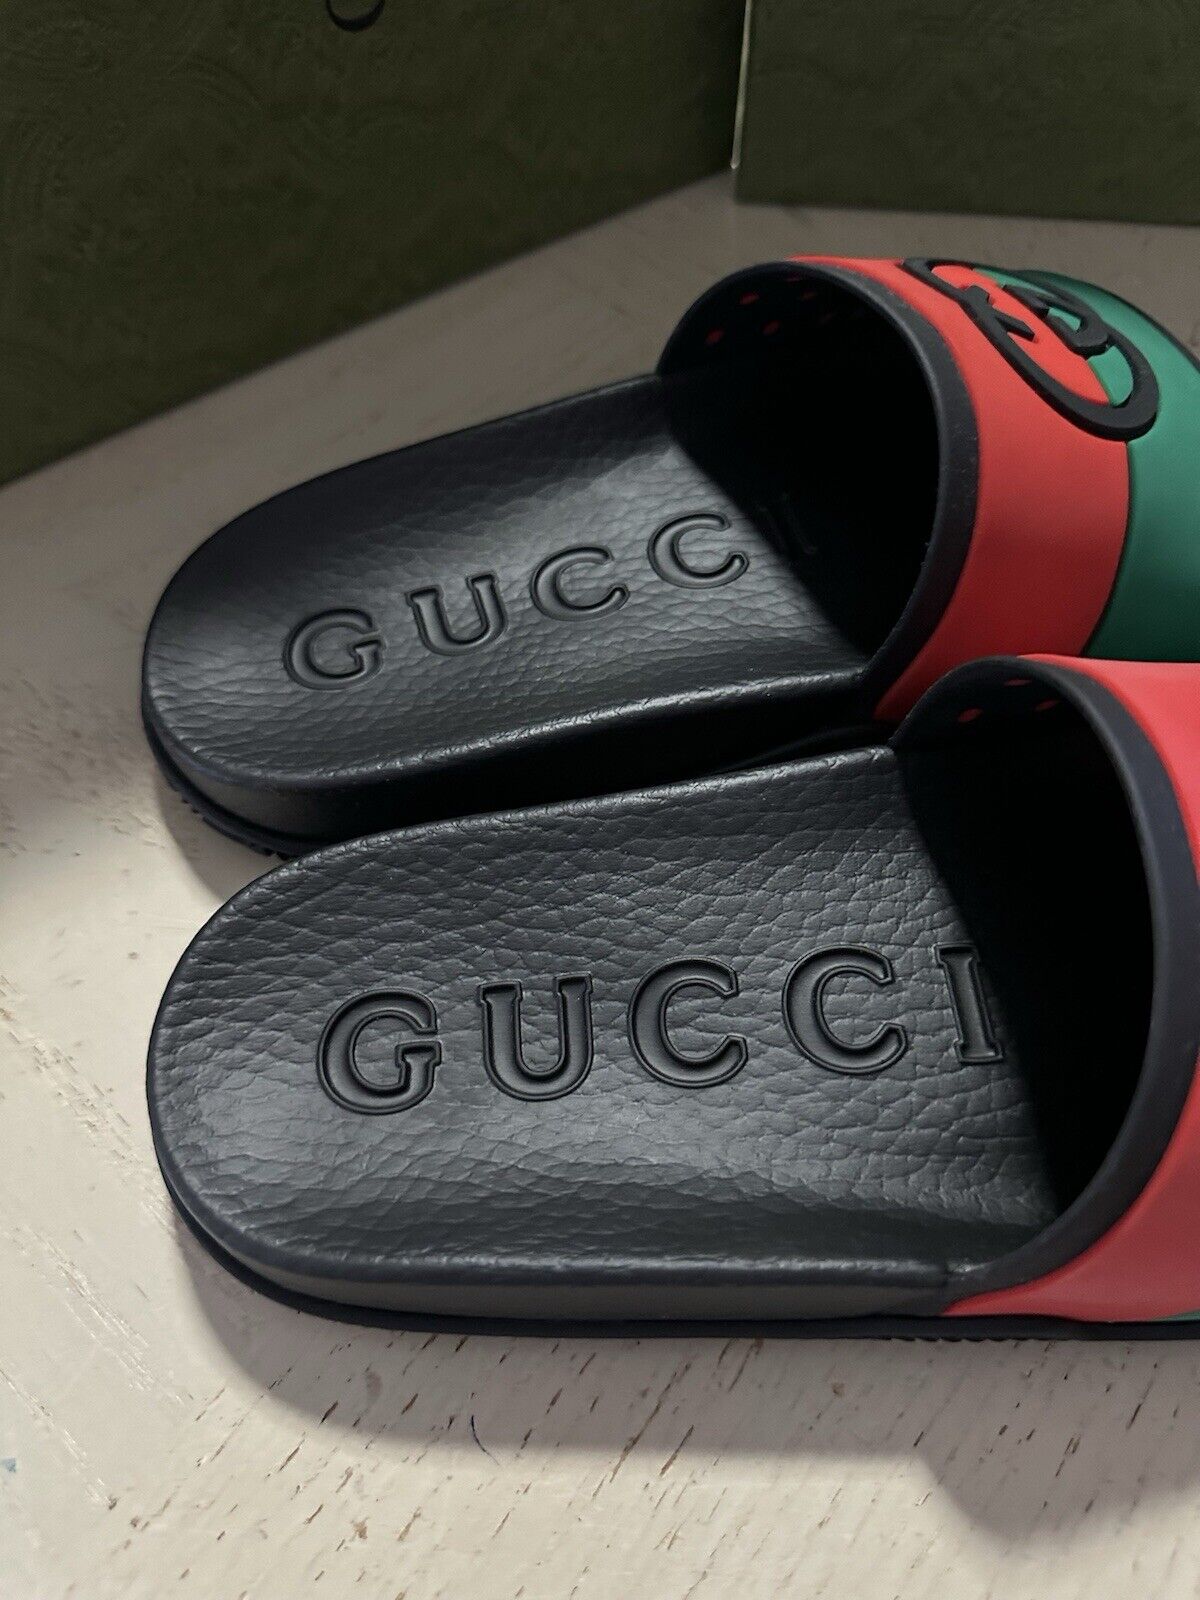 Gucci Women GG Interlock Sandal Shoes Red/Green/Black 6 US ( 36 Eu ) 655461 New